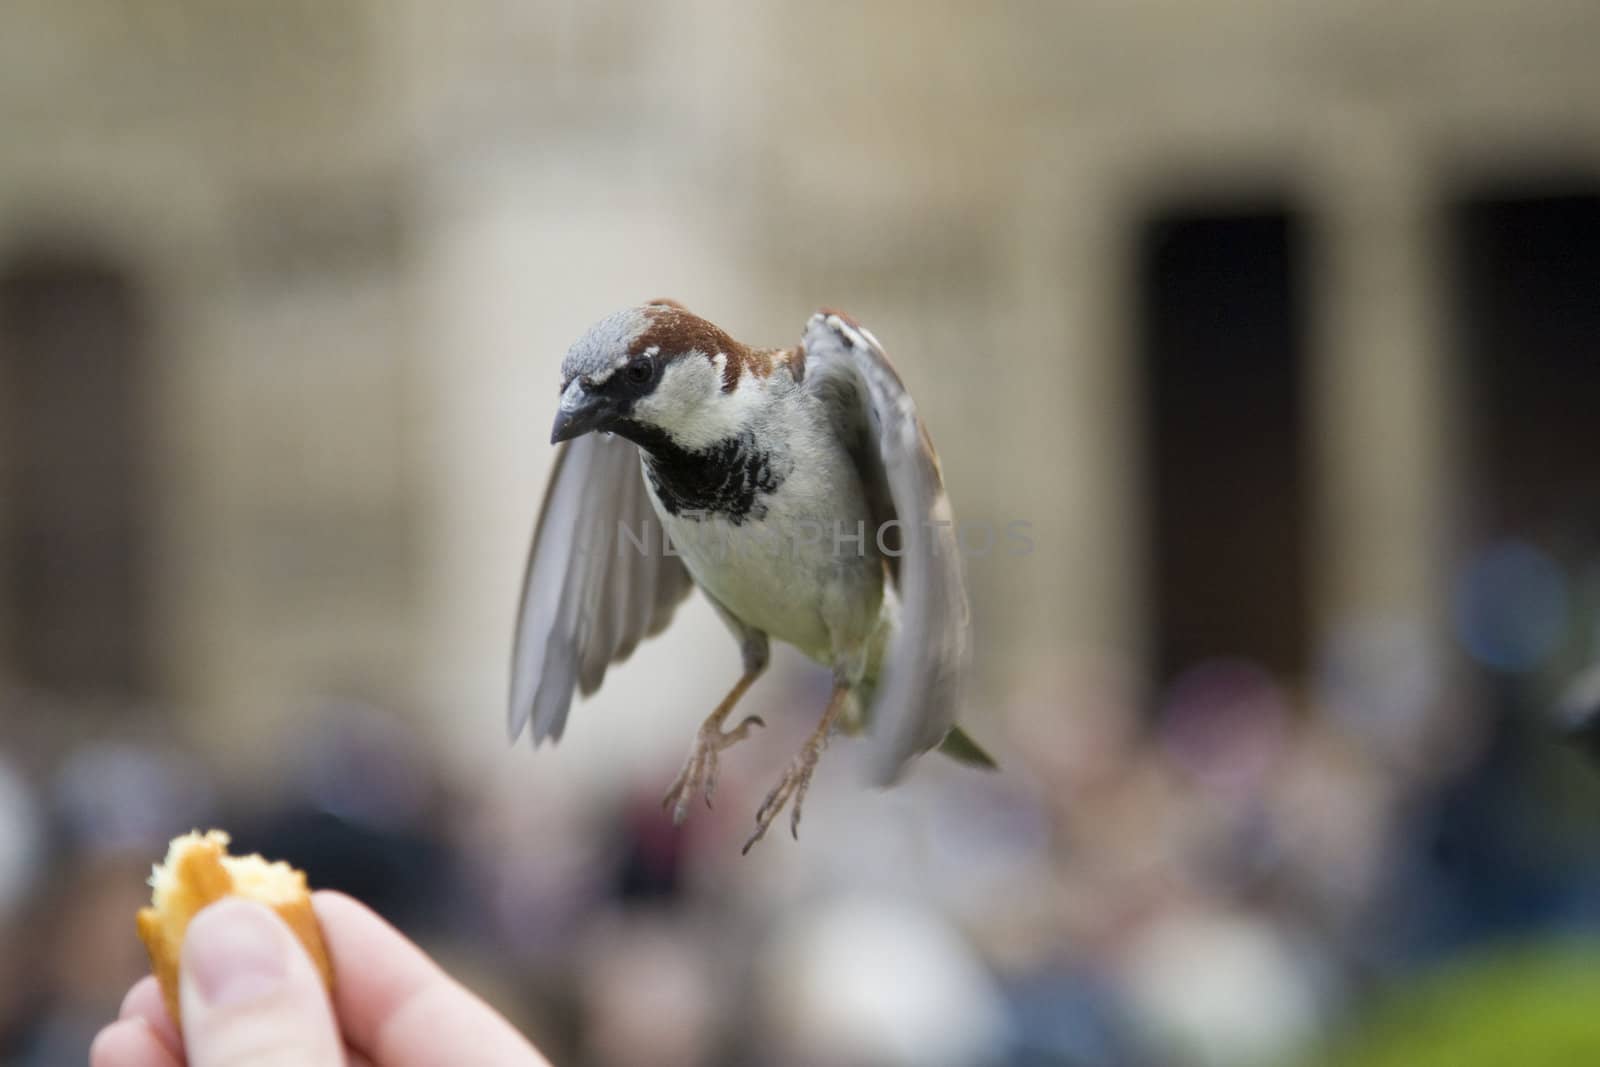 Sparrows Eating by MihaiDancaescu